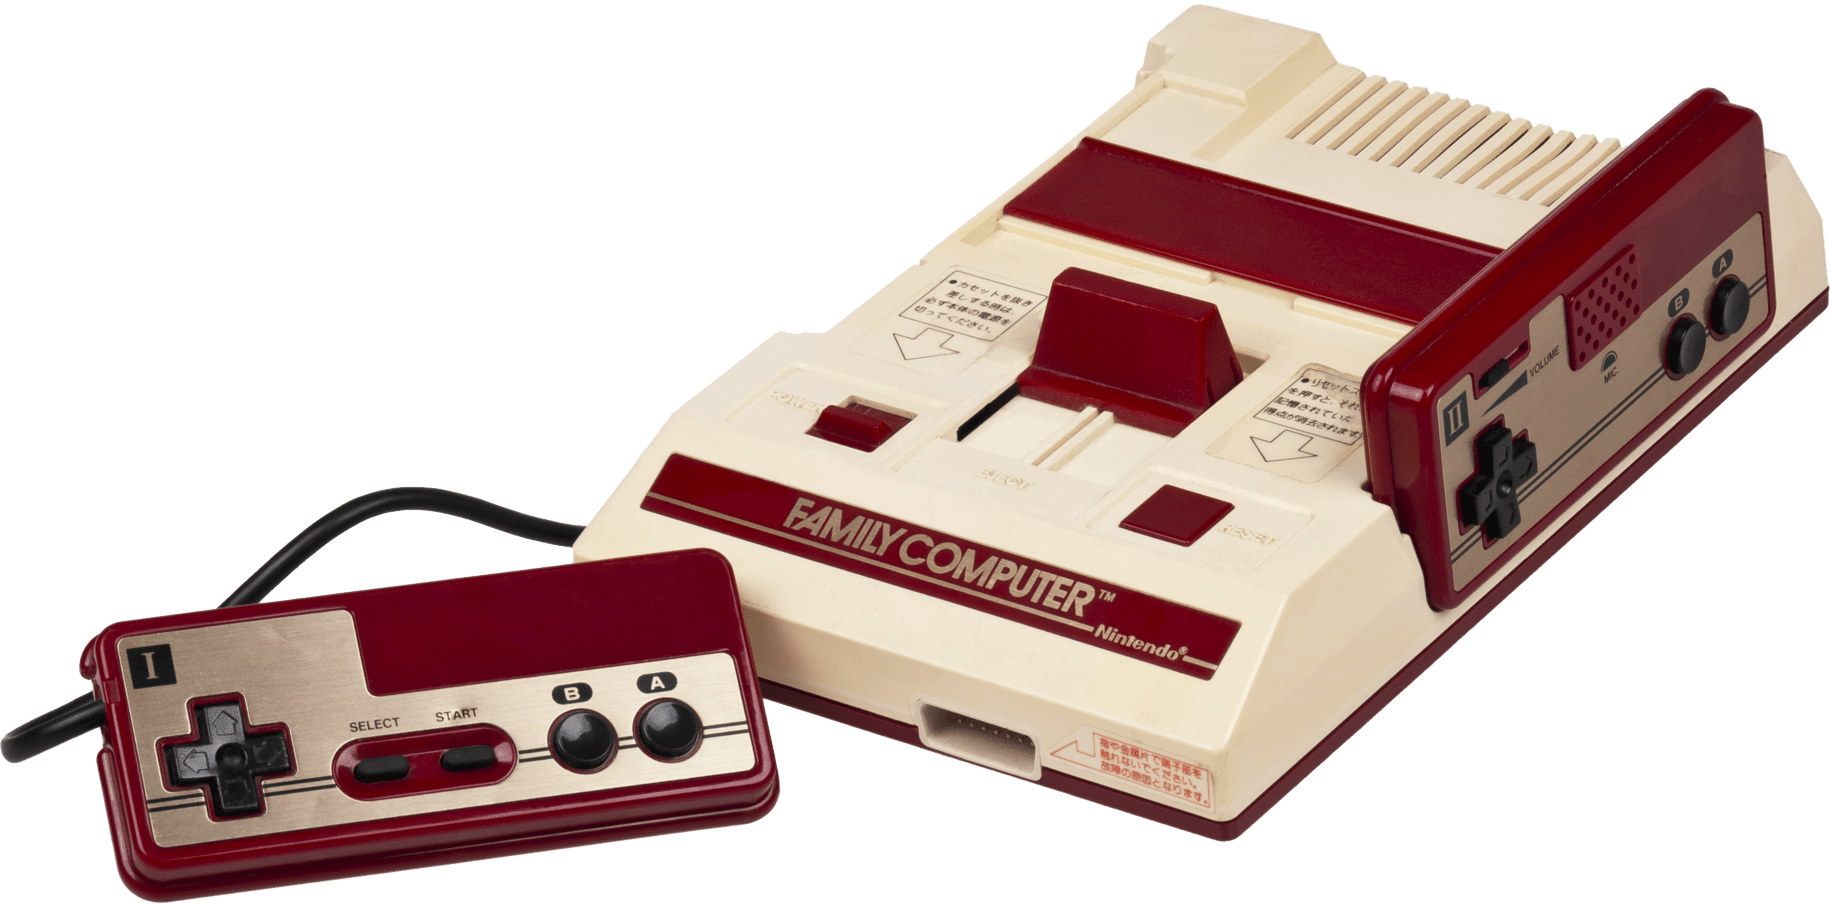 8 bit consoles